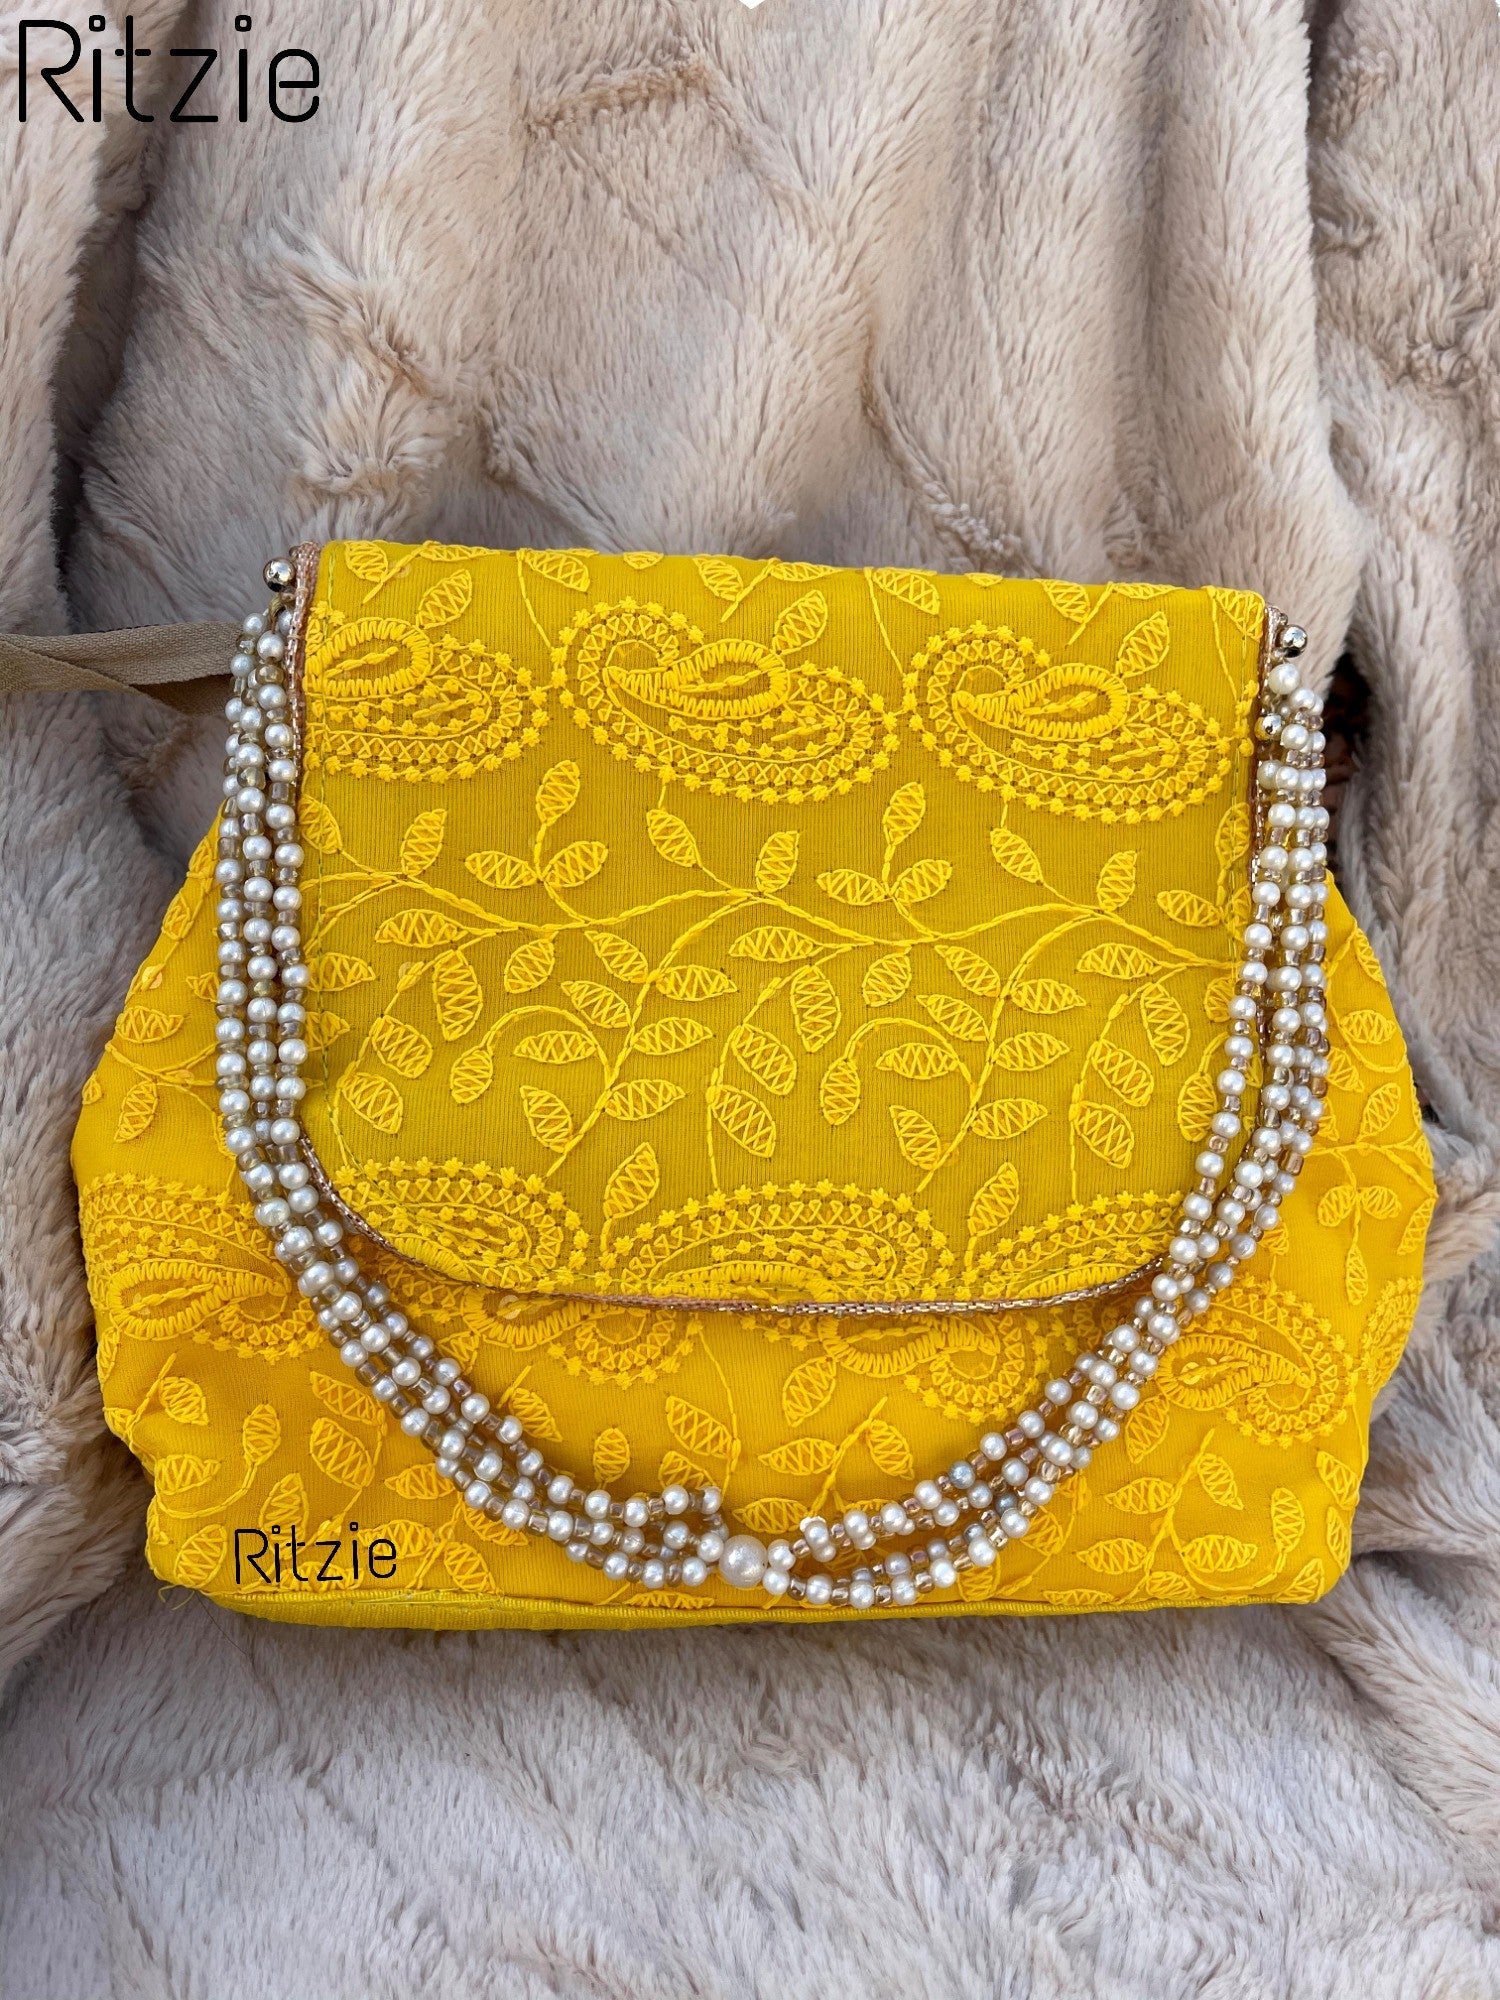 New trending Moti bag design and ladies beaded bag purse l Hand bag l Pearl  purse l crafts design l - YouTube